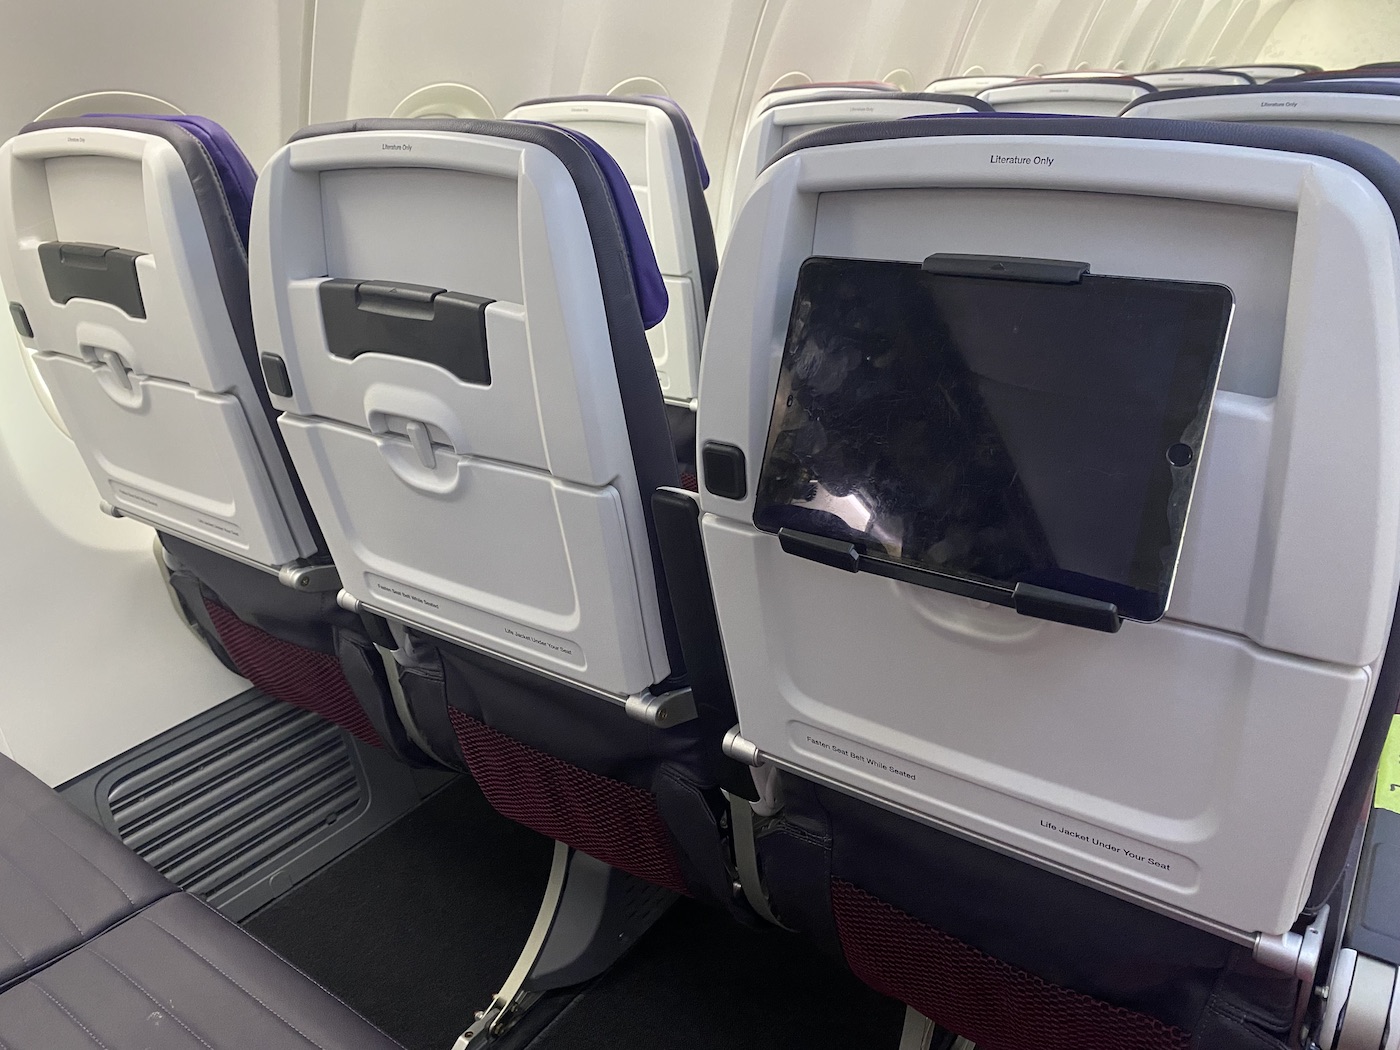 An ipad mounted in the The prototype Virgin Australia economy class seat